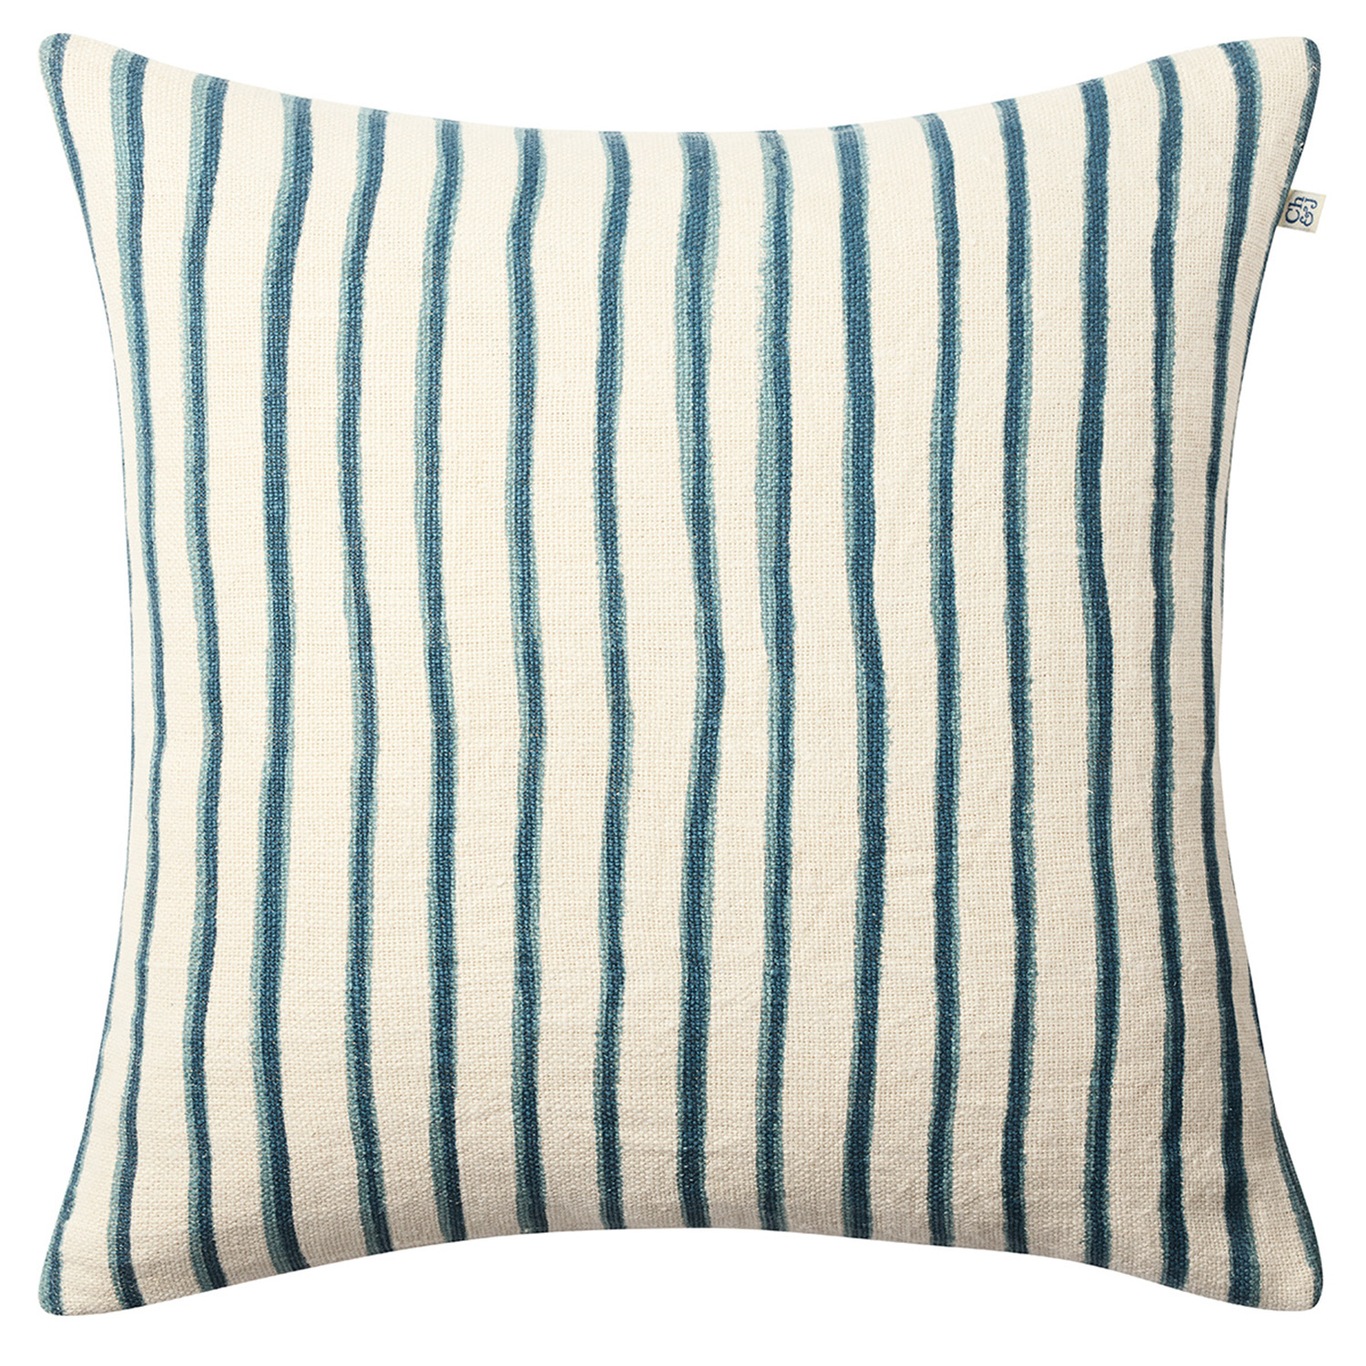 Jaipur Stripe Cushion Cover 50x50 cm, Heaven Blue/Palace Blue